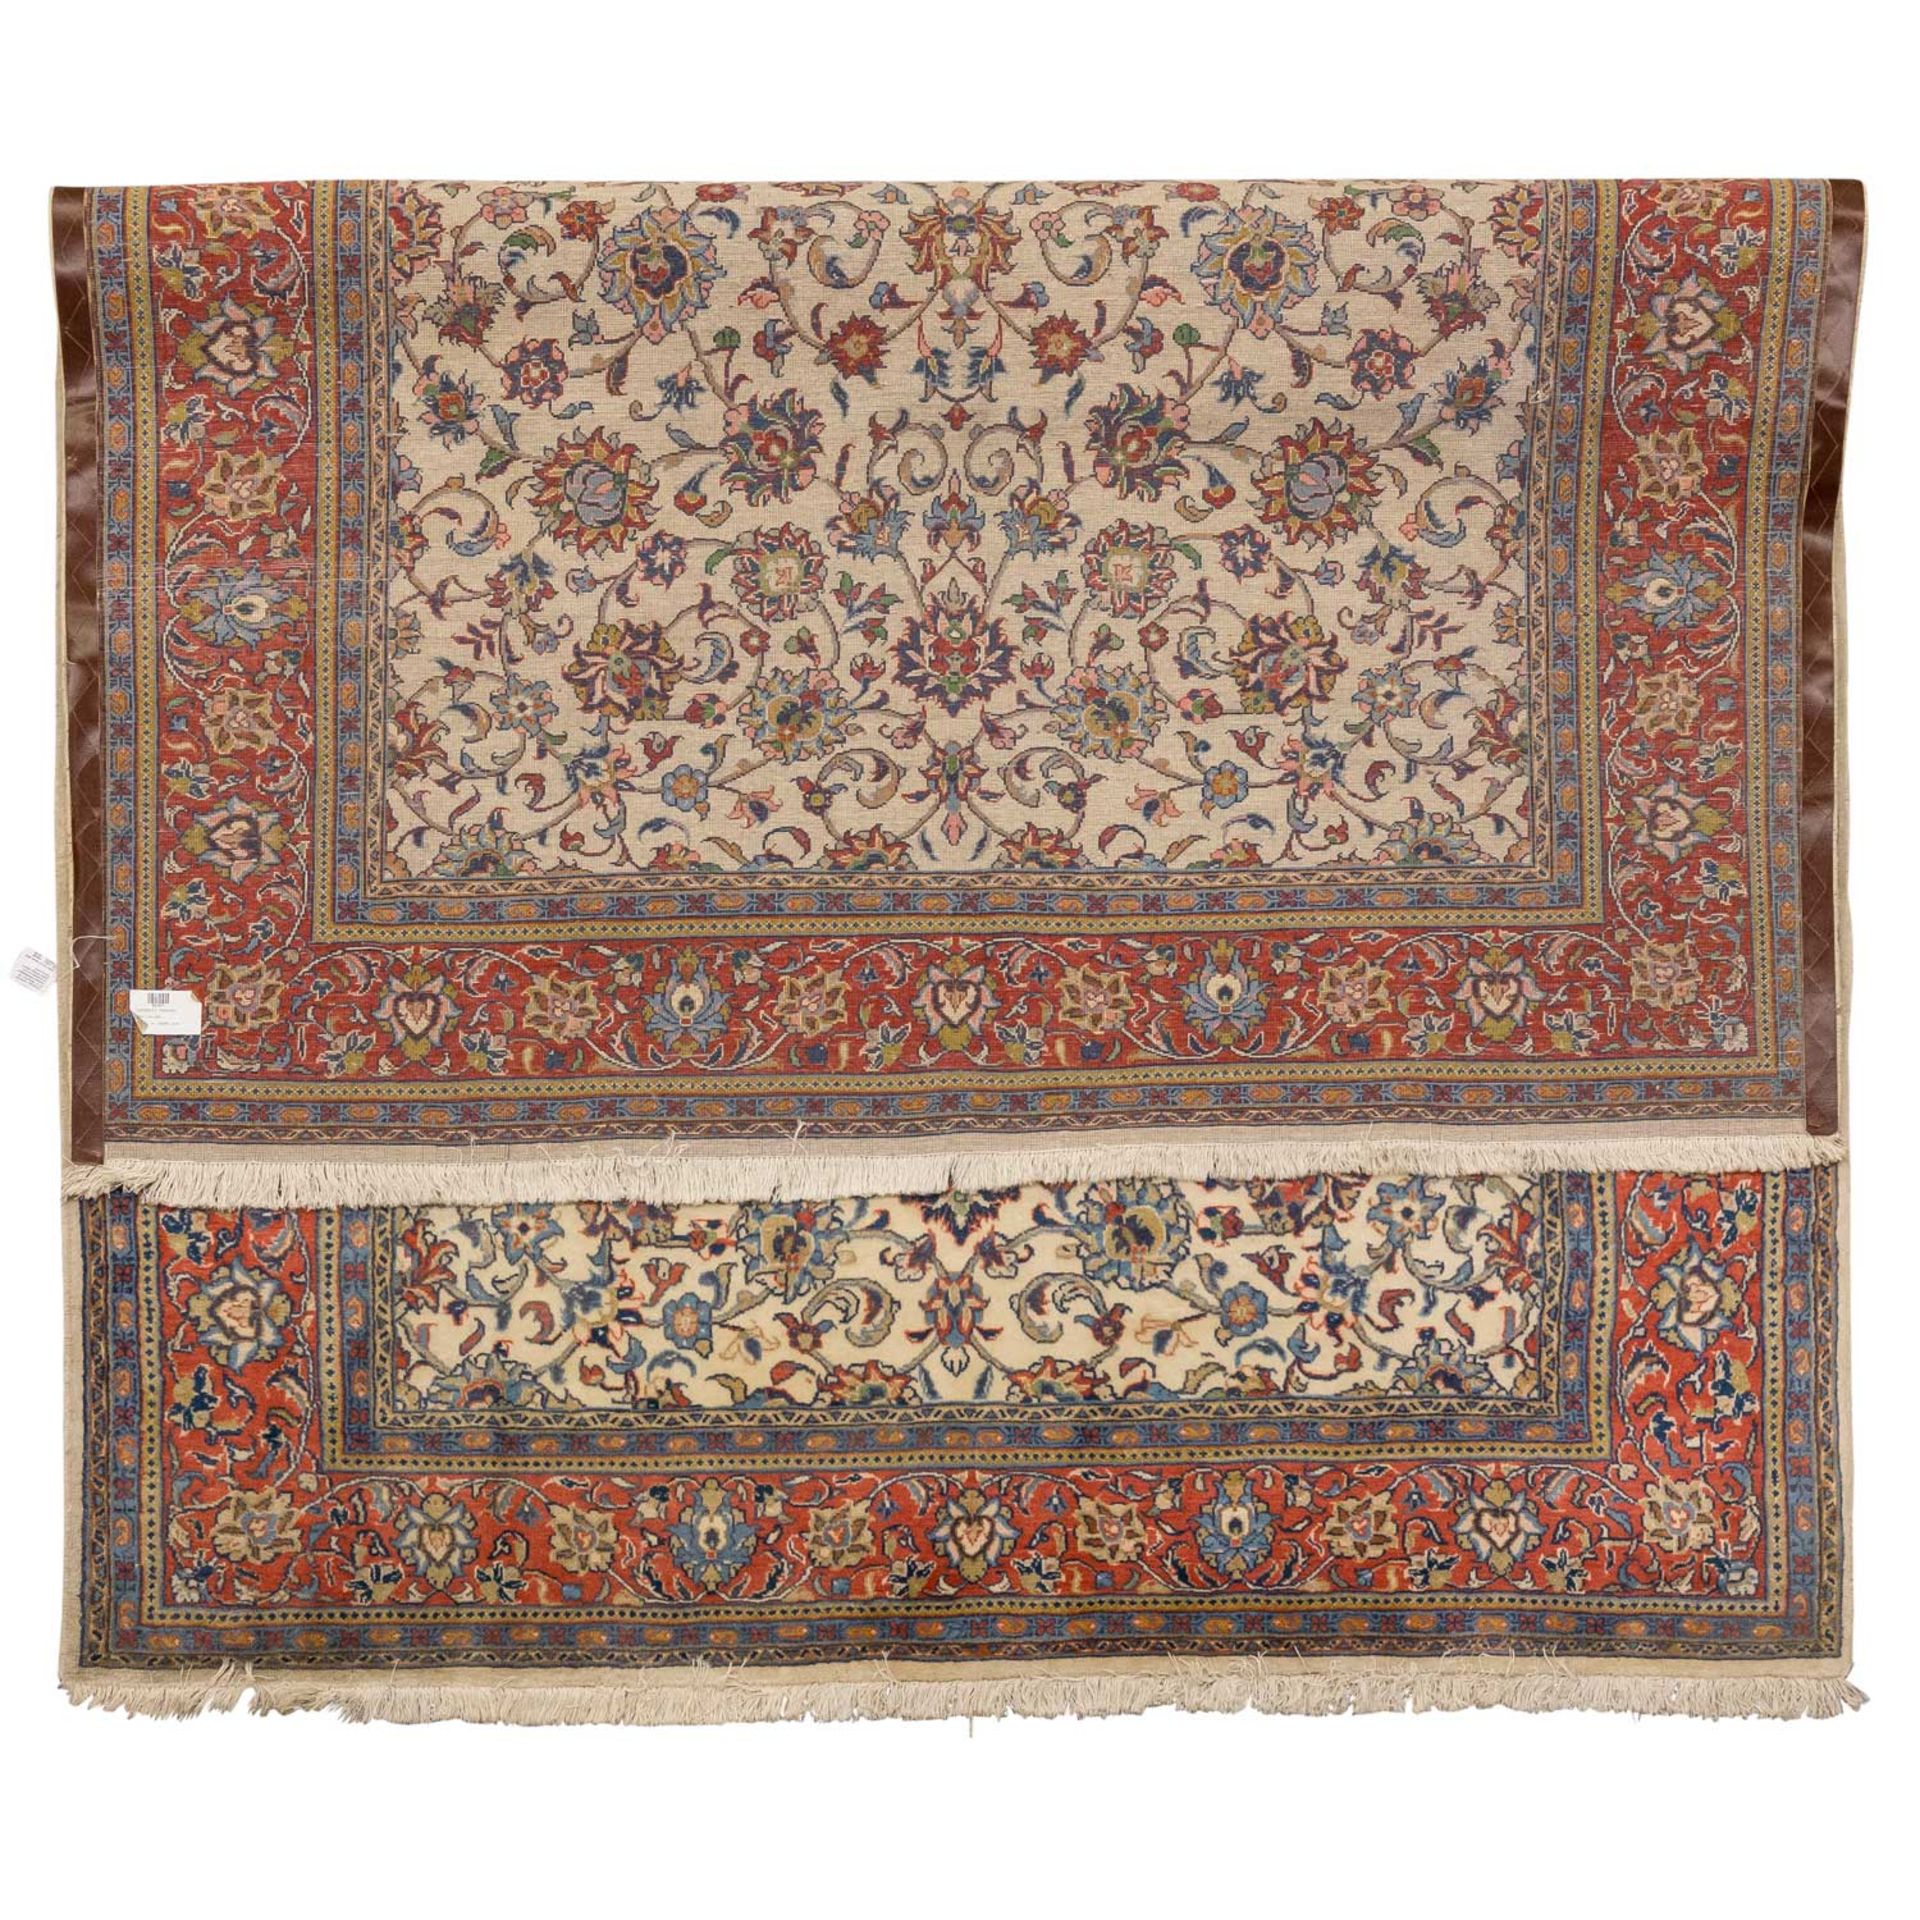 Orientteppich 'SAROUGH', 20. Jh., 290x205 cm. - Image 2 of 3